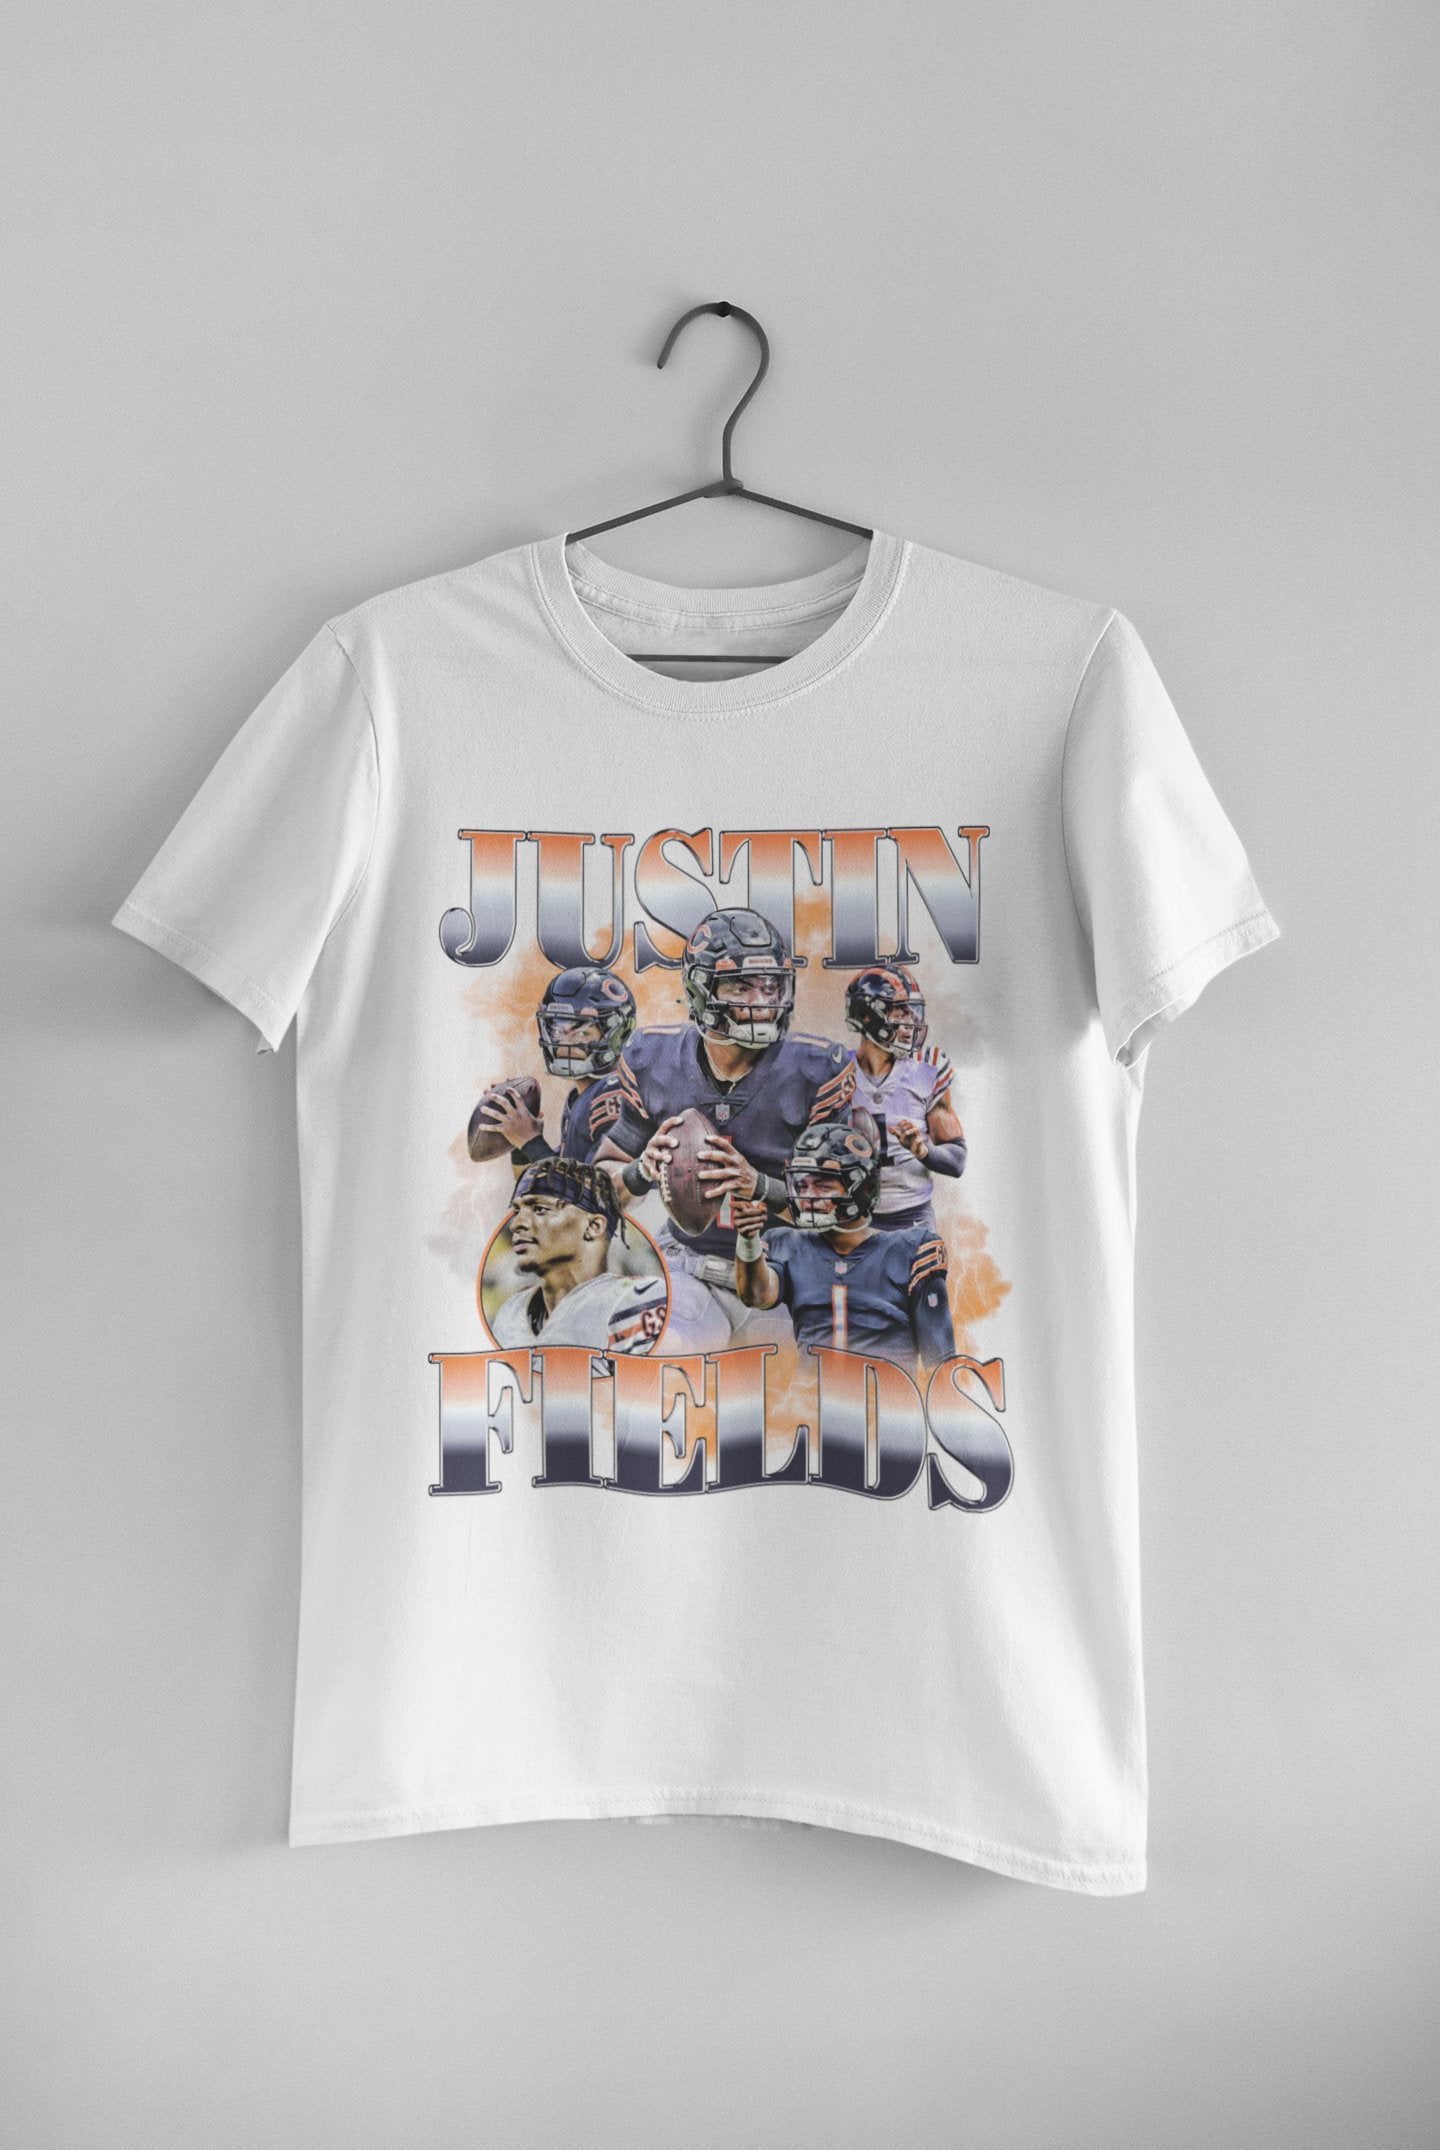 Justin Fields - Unisex t-shirt - Modern Vintage Apparel